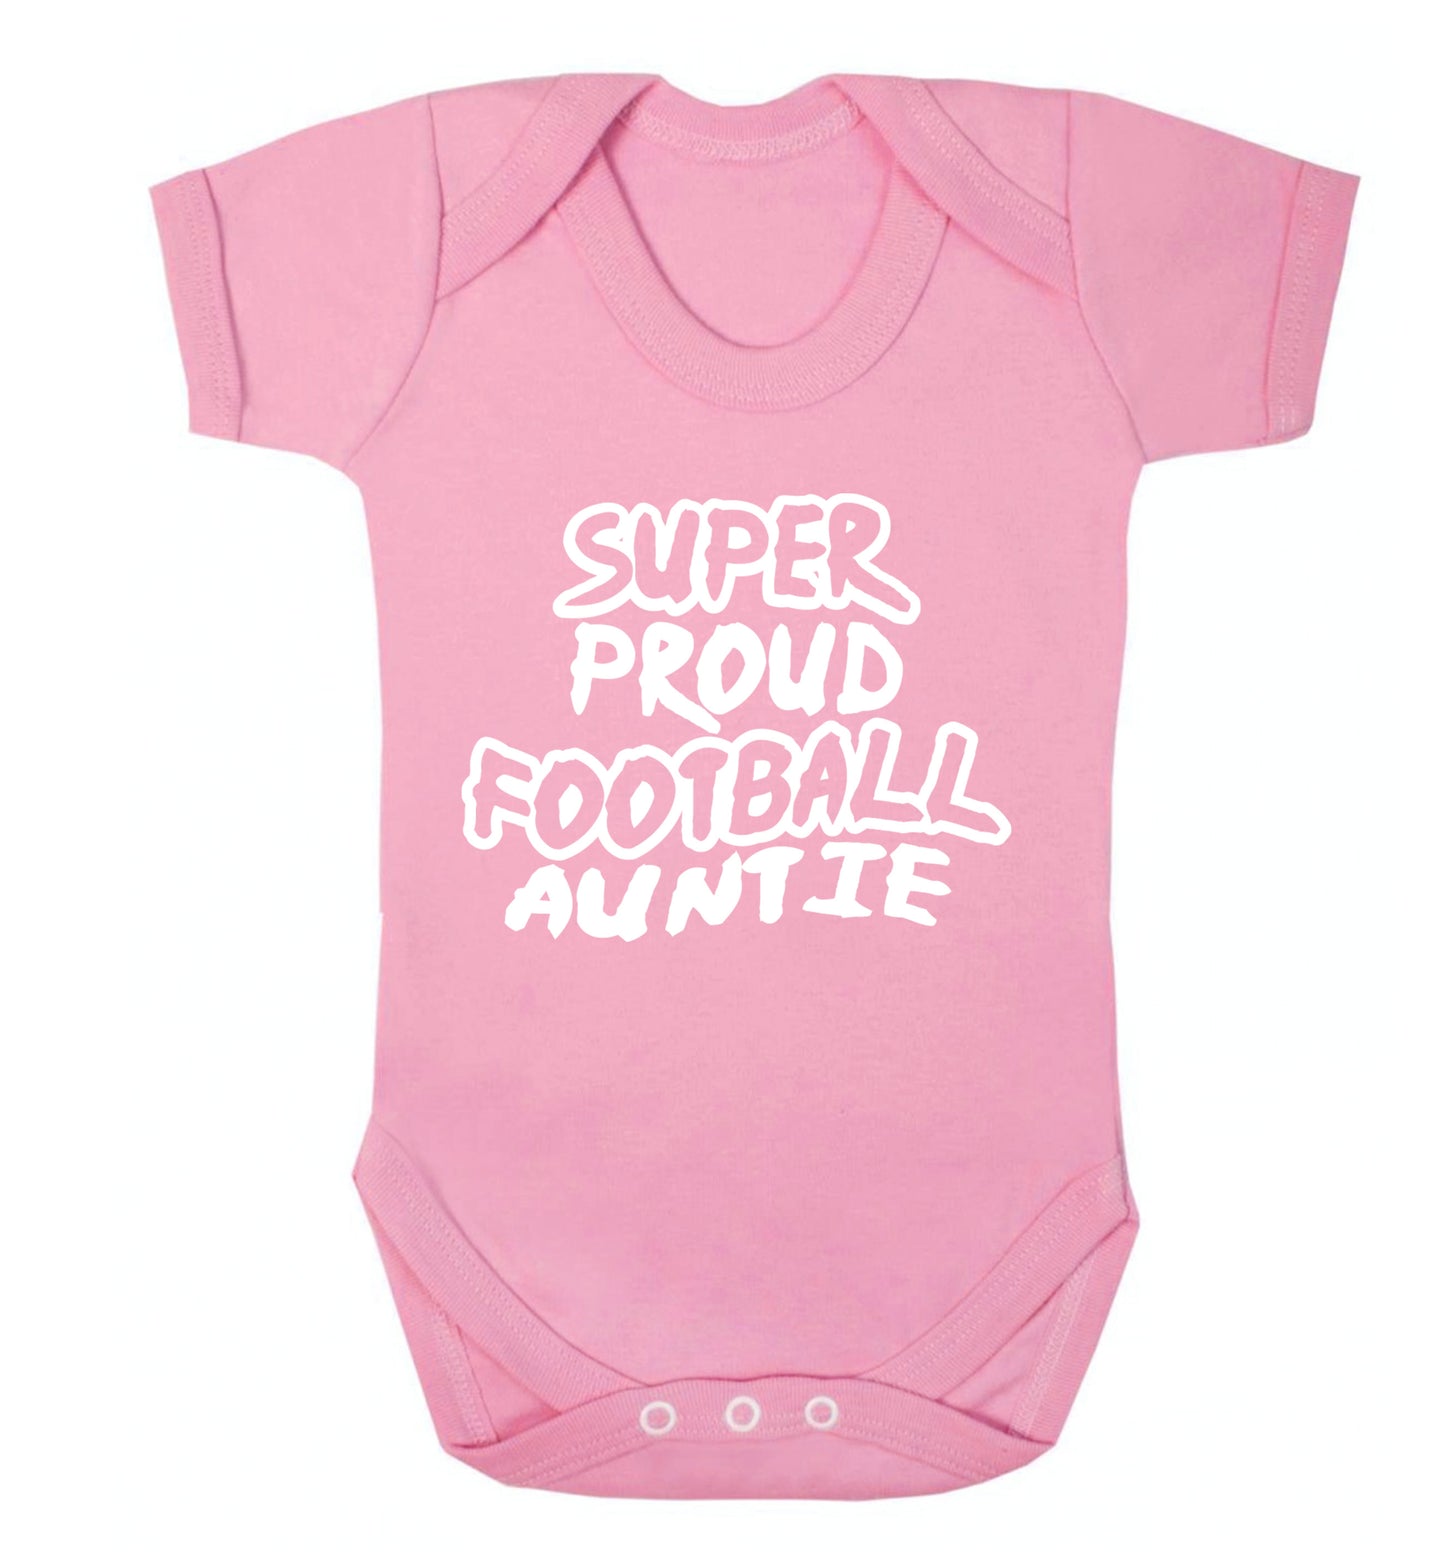 Super proud football auntie Baby Vest pale pink 18-24 months